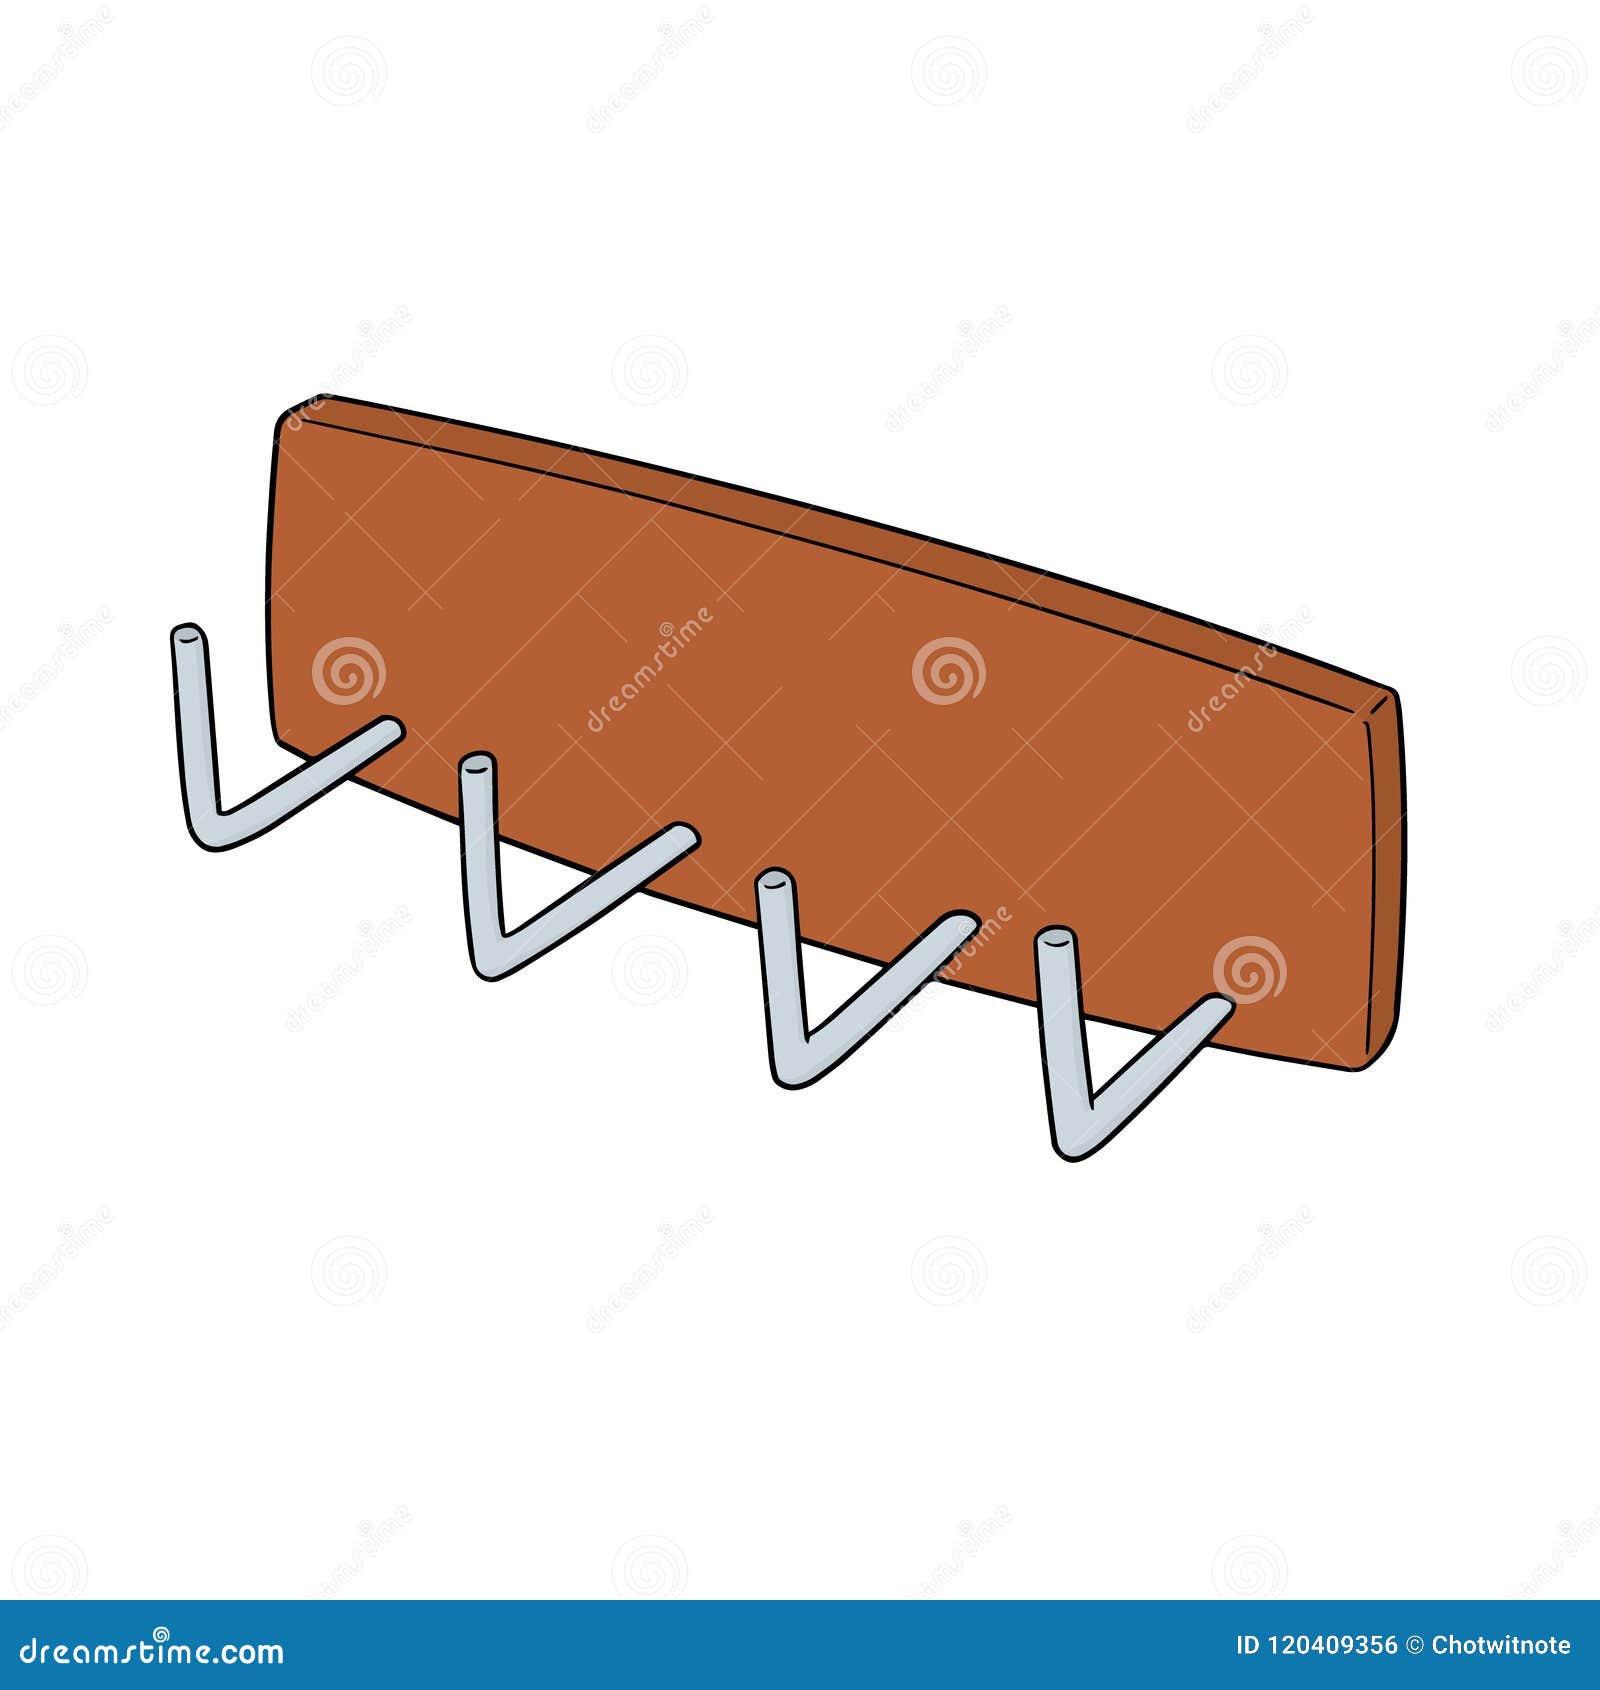 Vector of wall hook stock vector. Illustration of arrange - 120409356